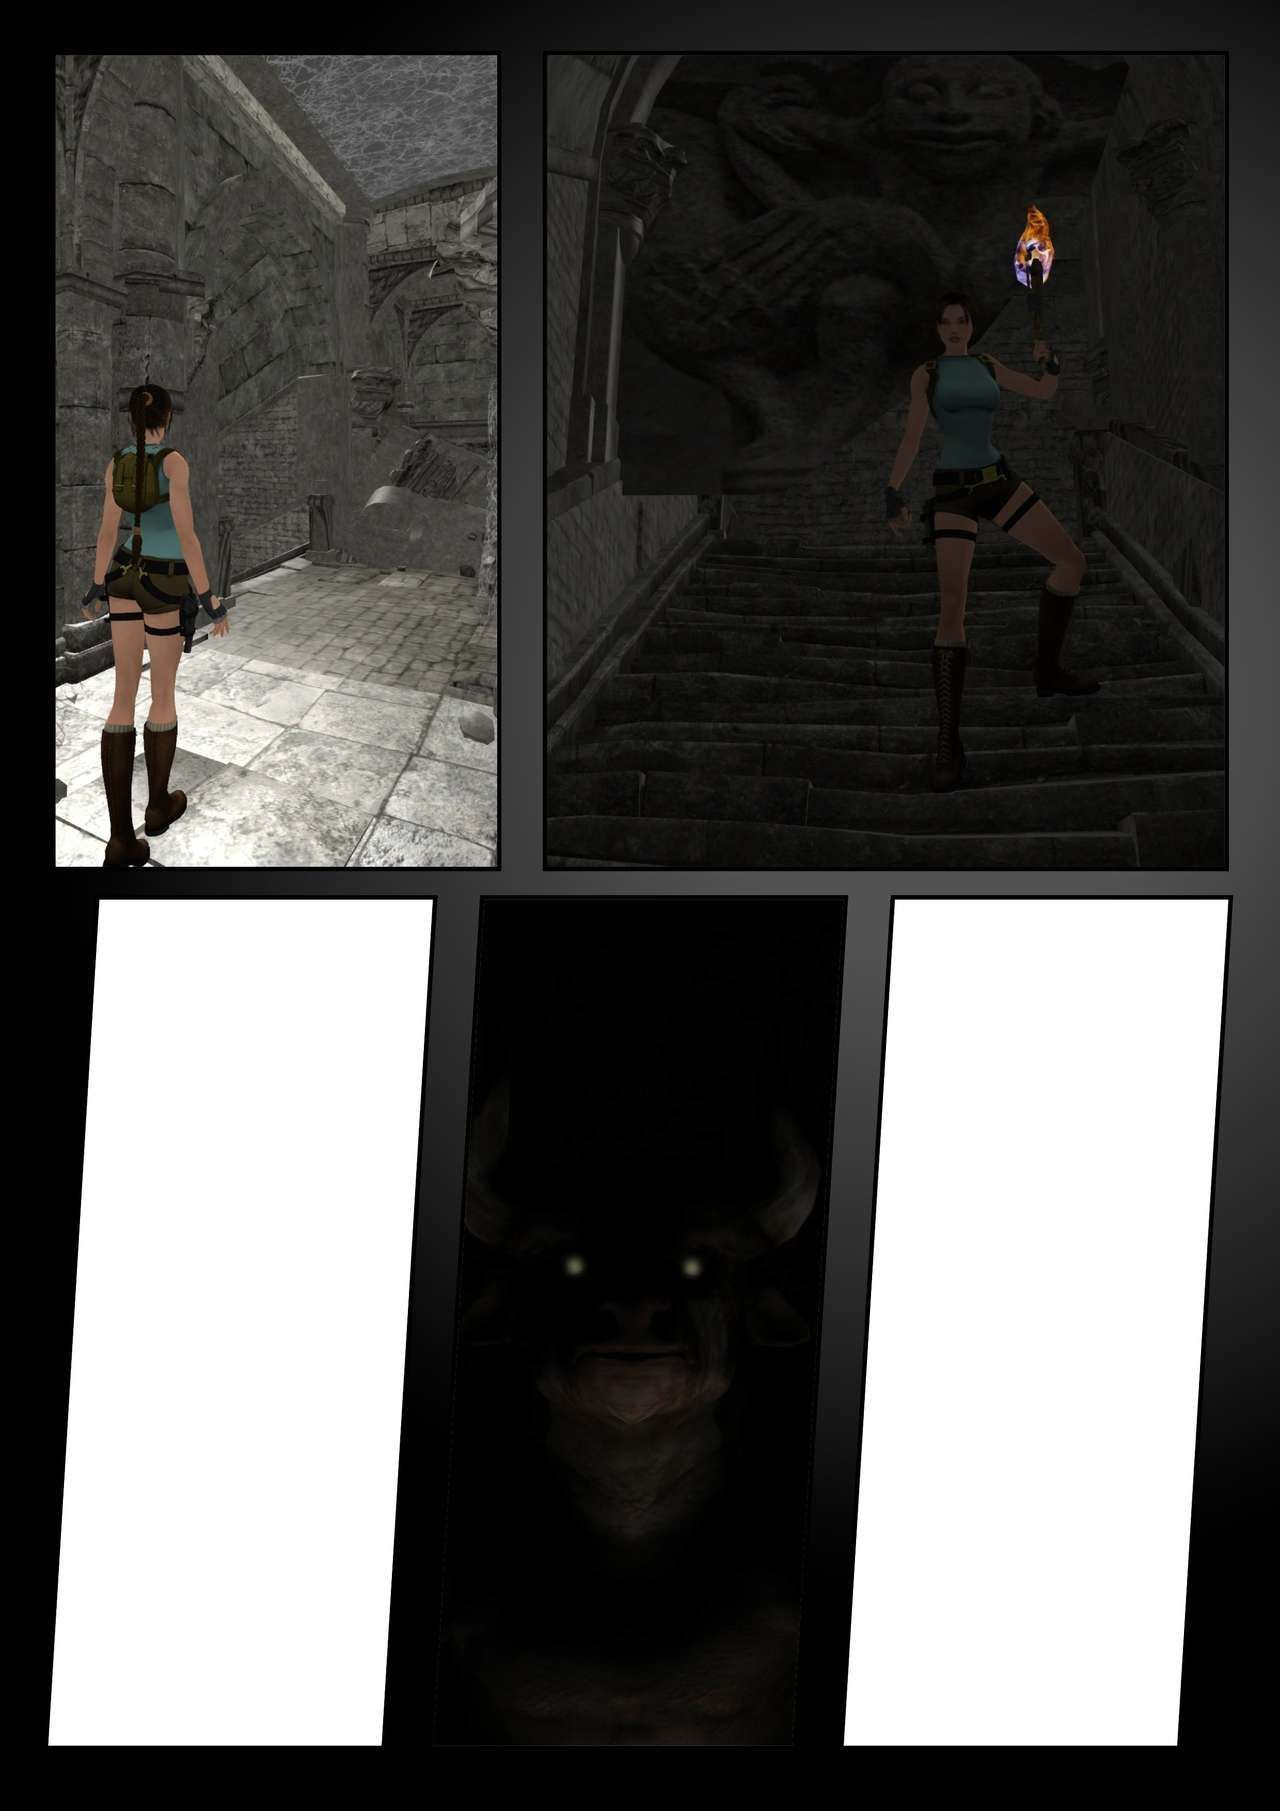 Lara 크로프트 대 이 미노타우 w.i.p.